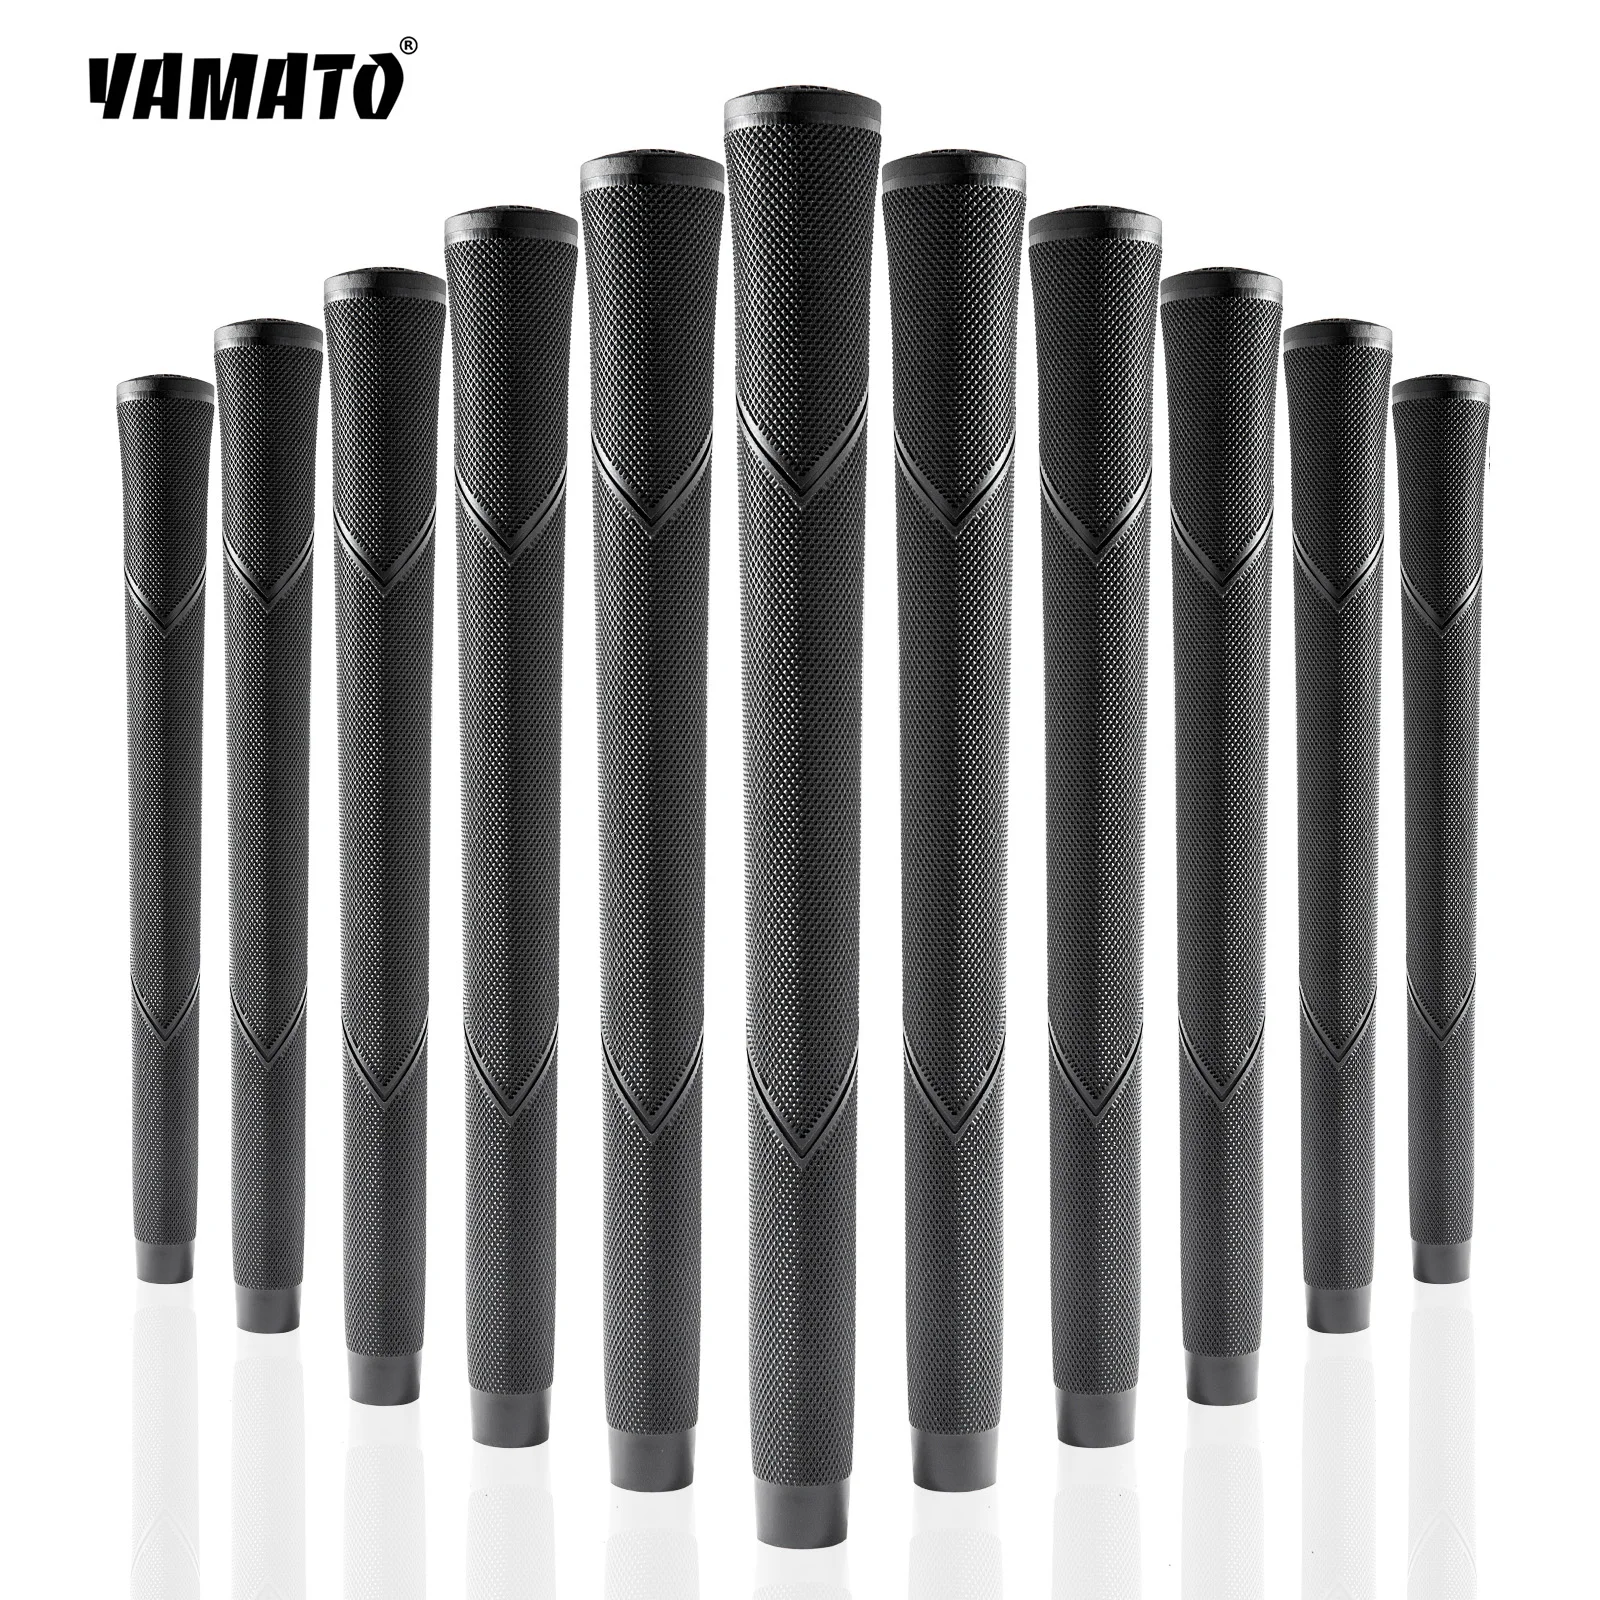 Yamato Black Jumbo Size Arthritic Grips for Golf Clubs 11 pcs/lot